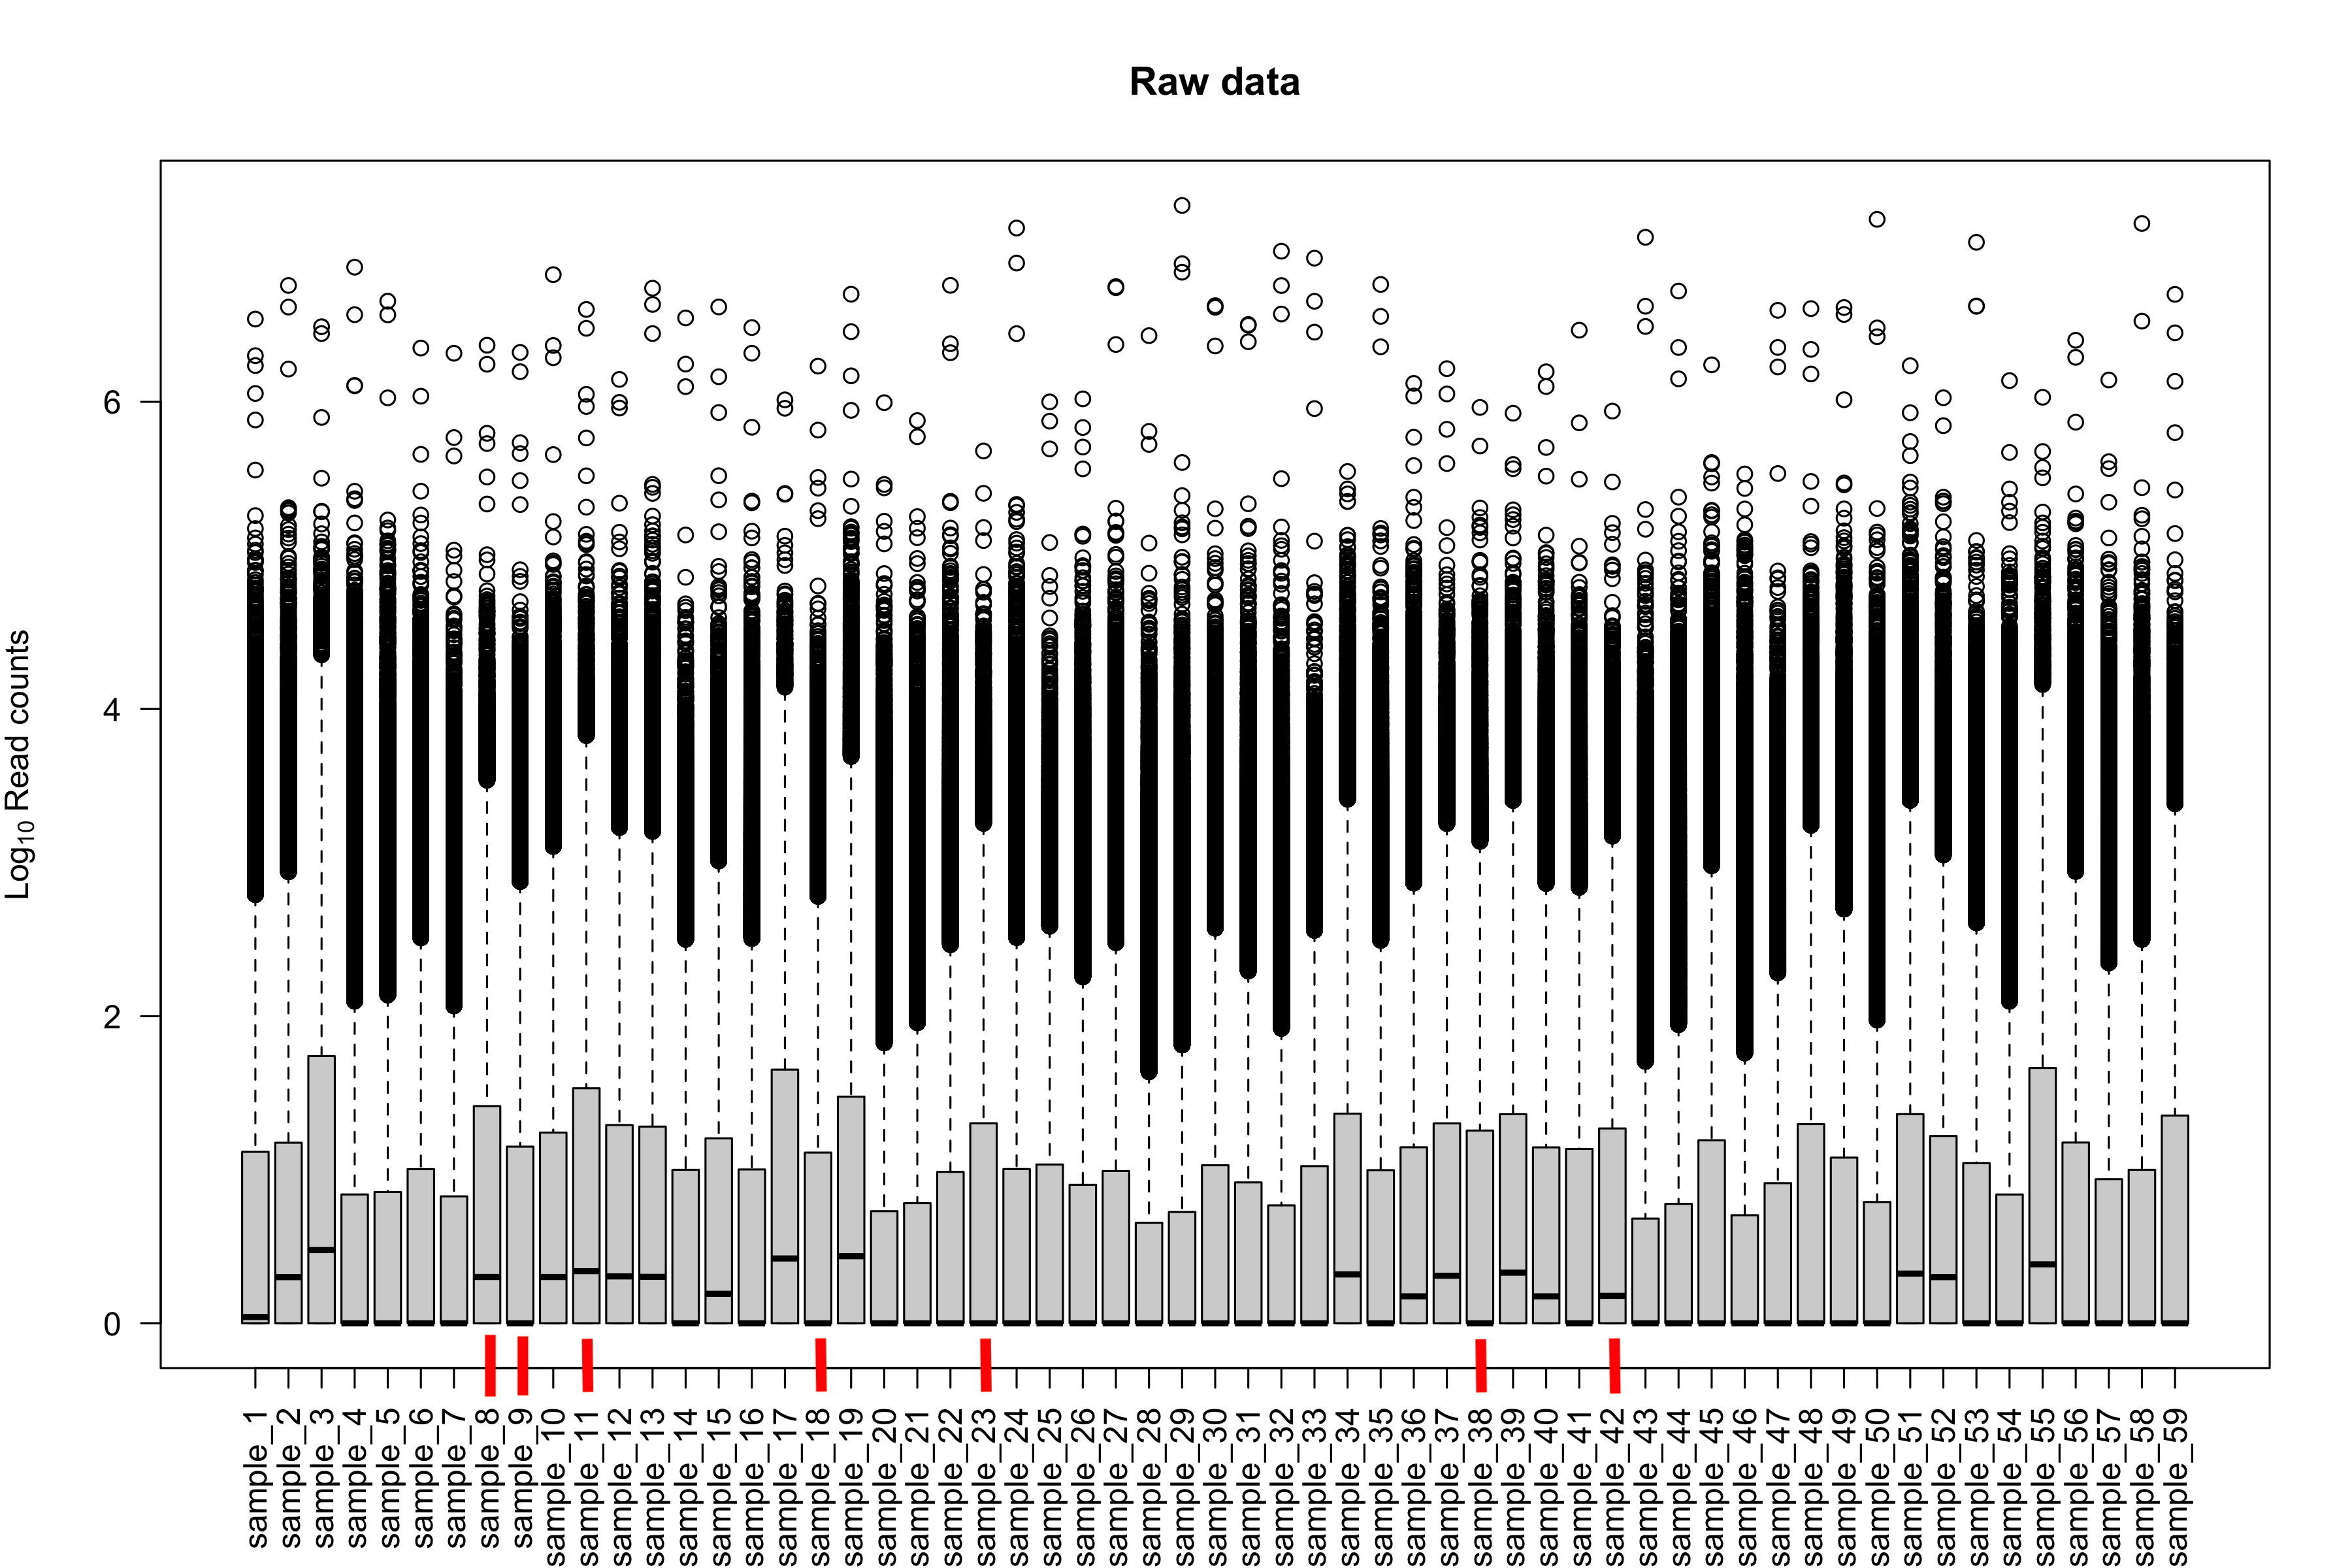 boxplots of log10 counts + 1 per sample using raw counts